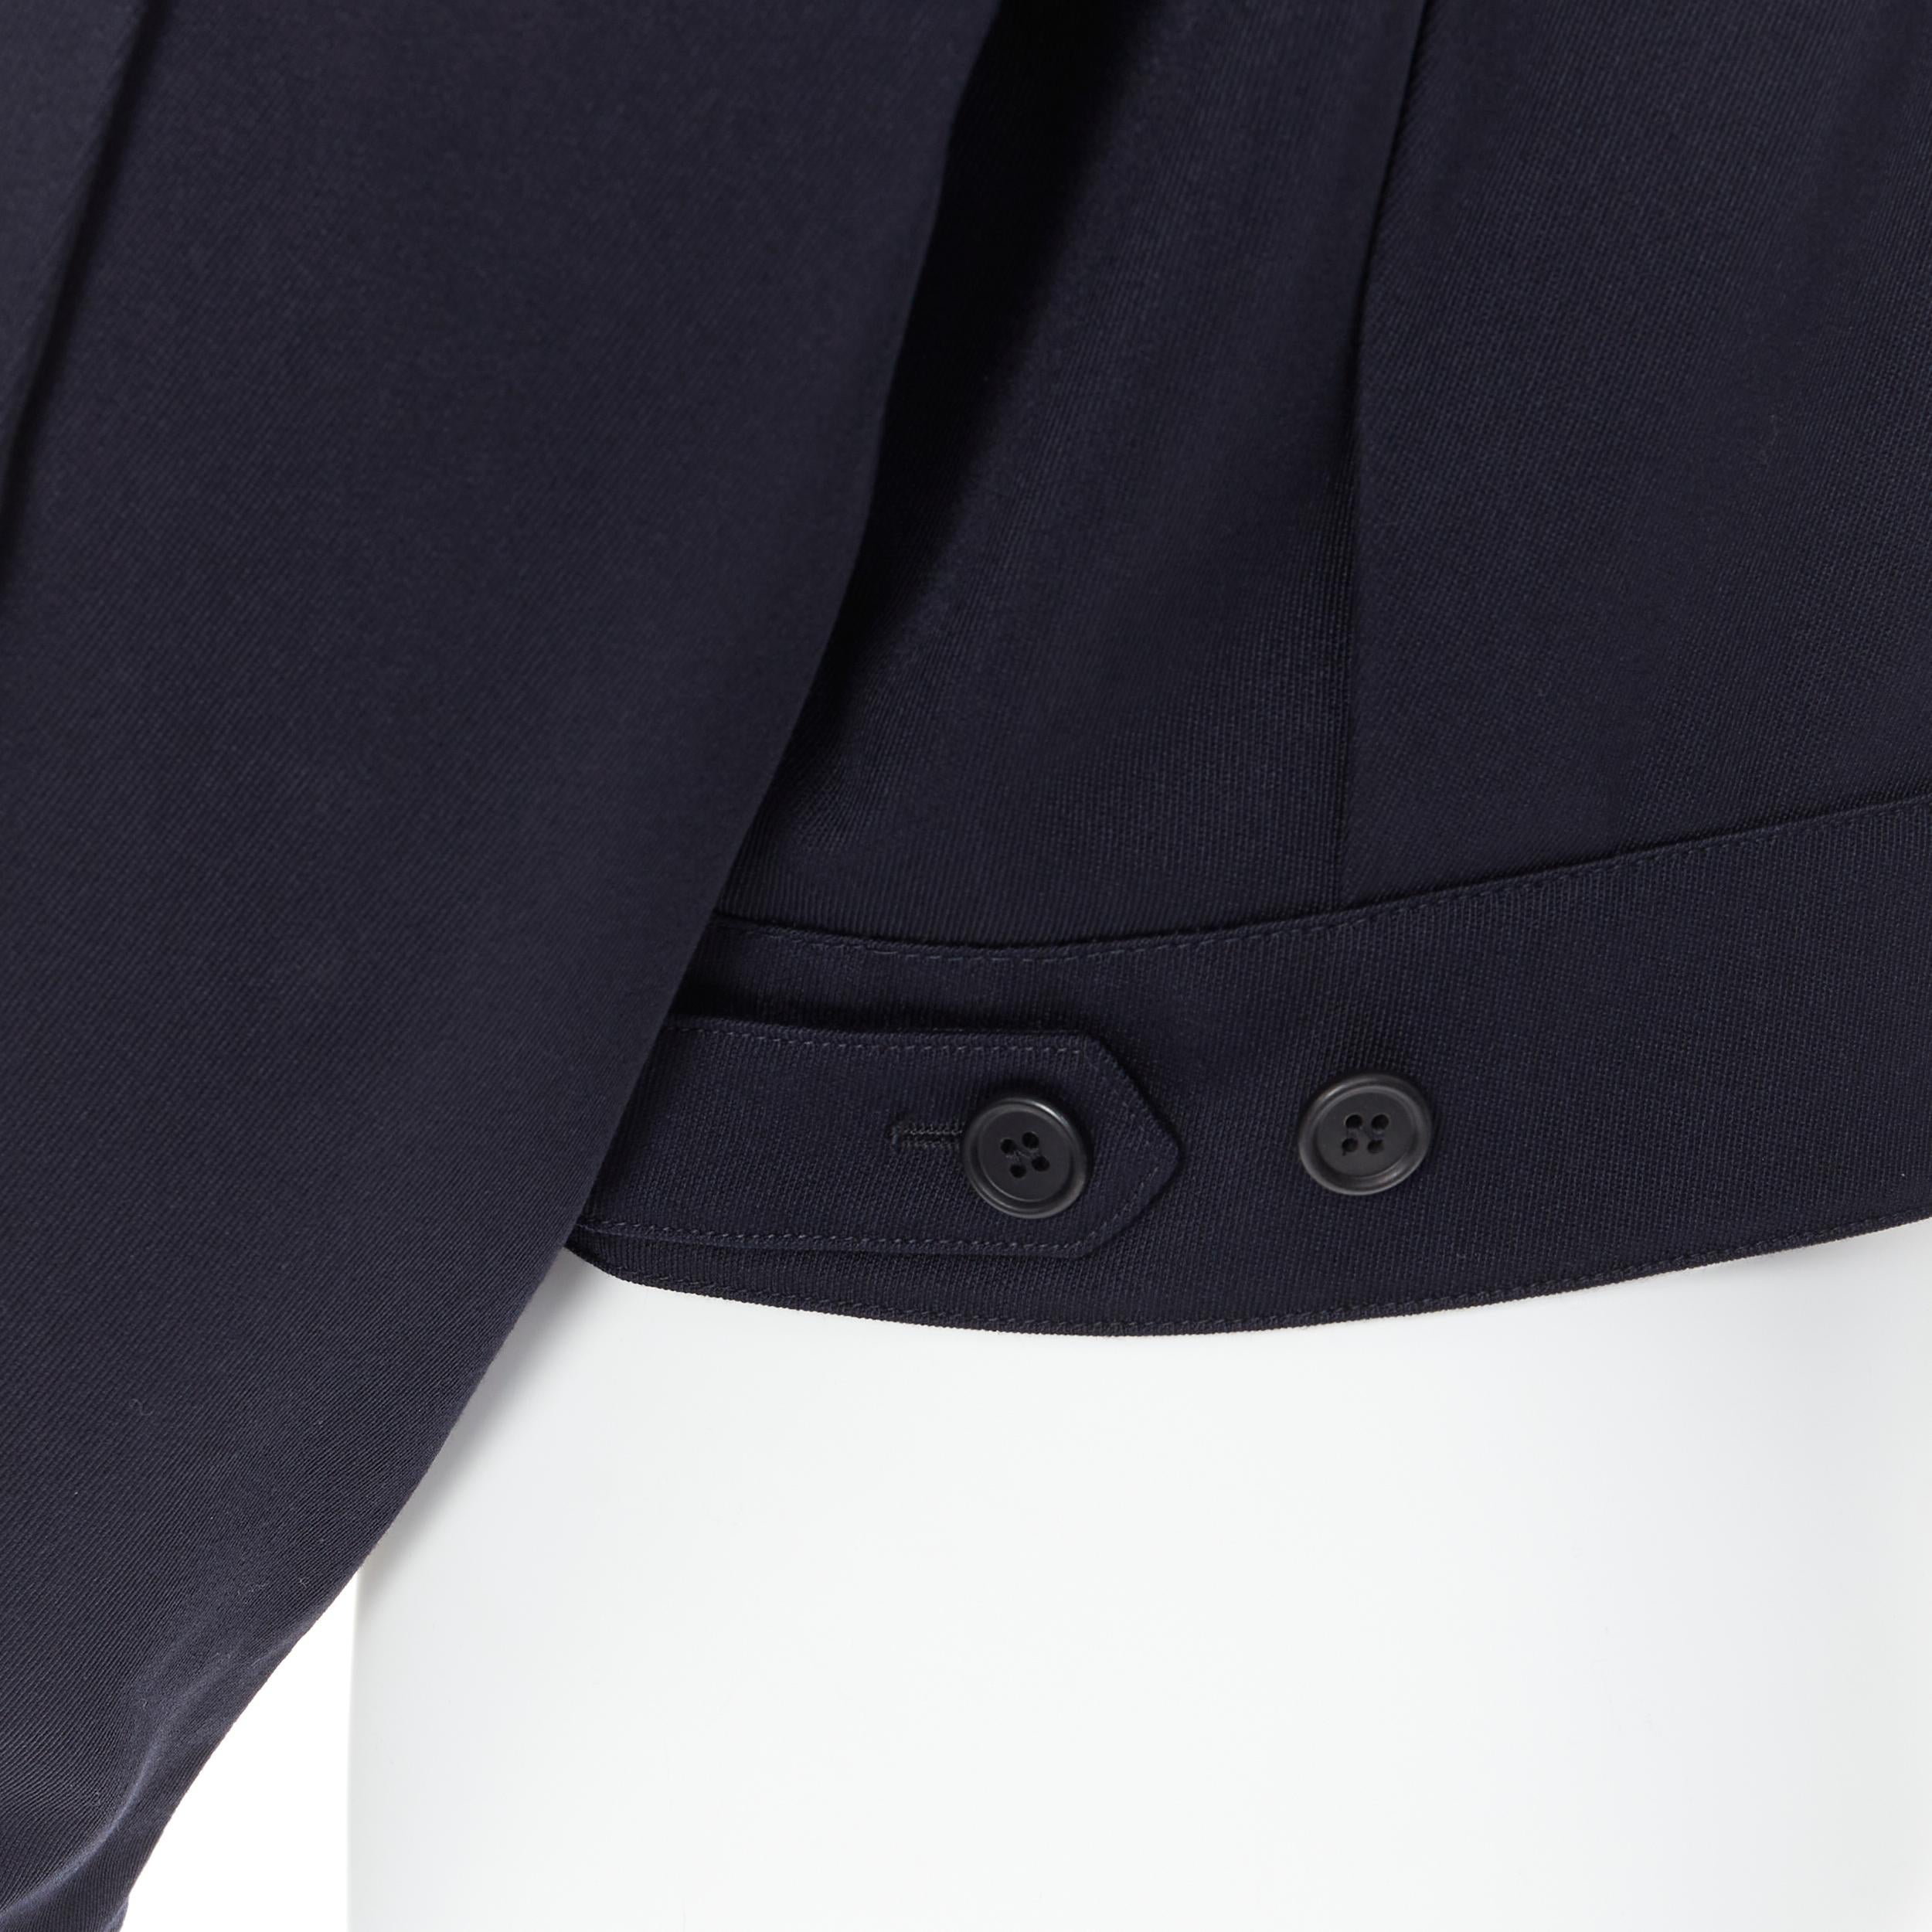 new PRADA 2019 navy blue wool triangle logo pocket cropped zip up hoodie jacket  For Sale 2